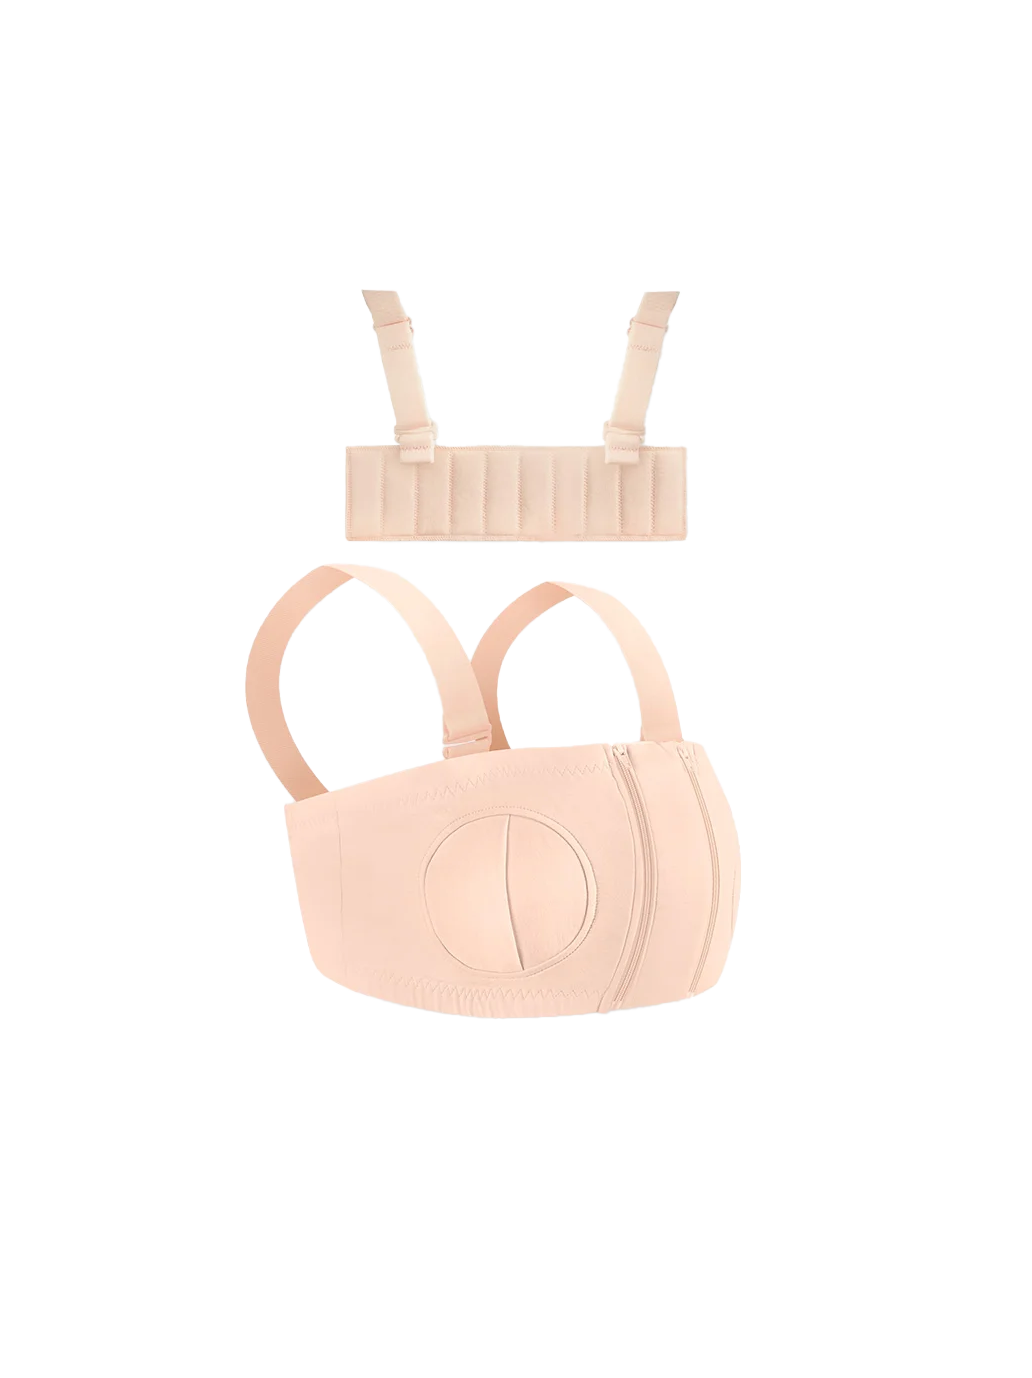 Neno Bianco double, three-phase, wireless electric breast pump